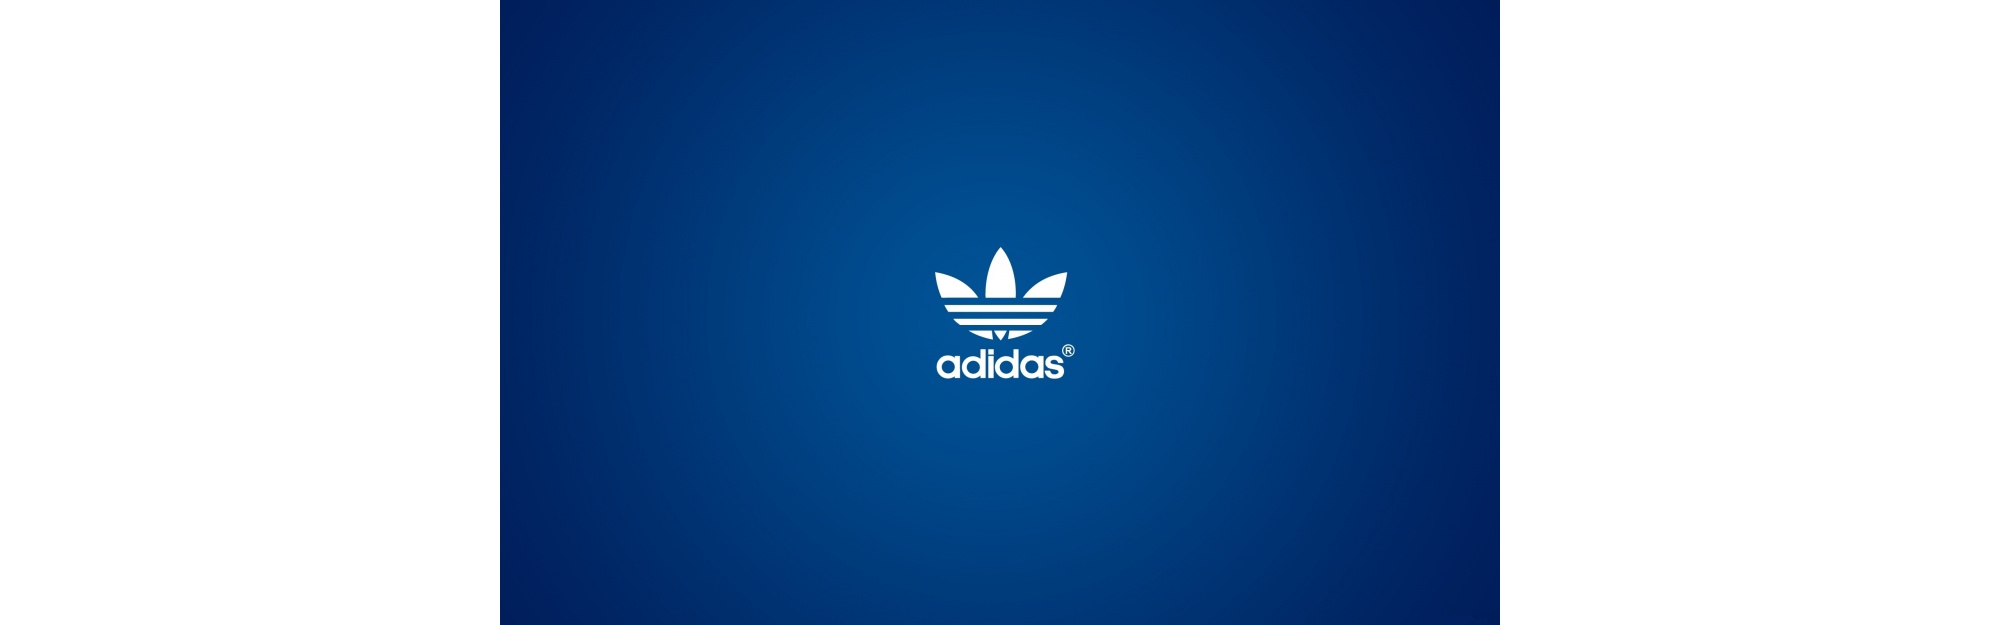 Selected Resoloution Wallpaper Adidas Originals Logo Size